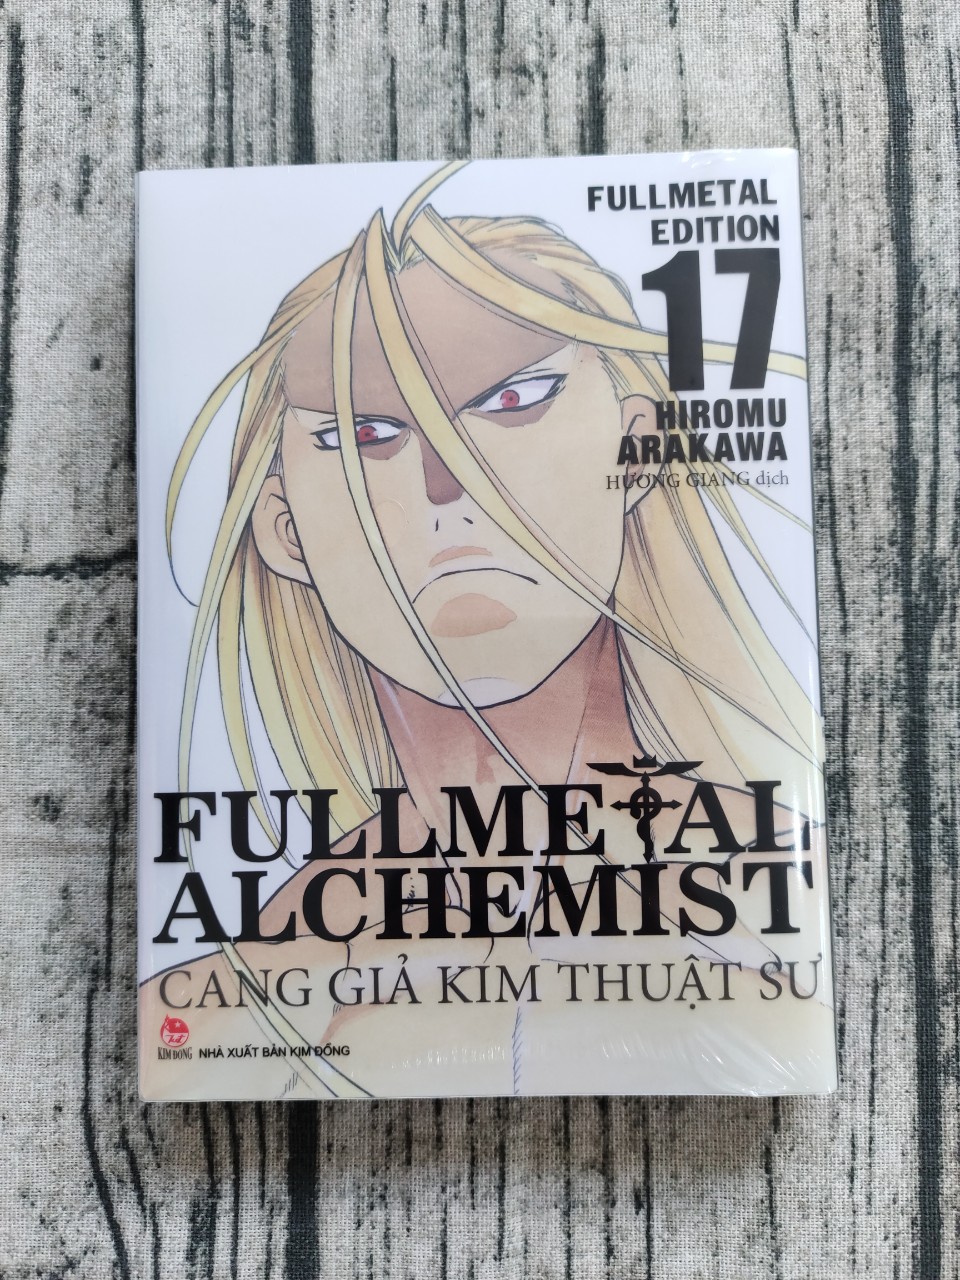 Fullmetal Alchemist - Cang Giả Kim Thuật Sư